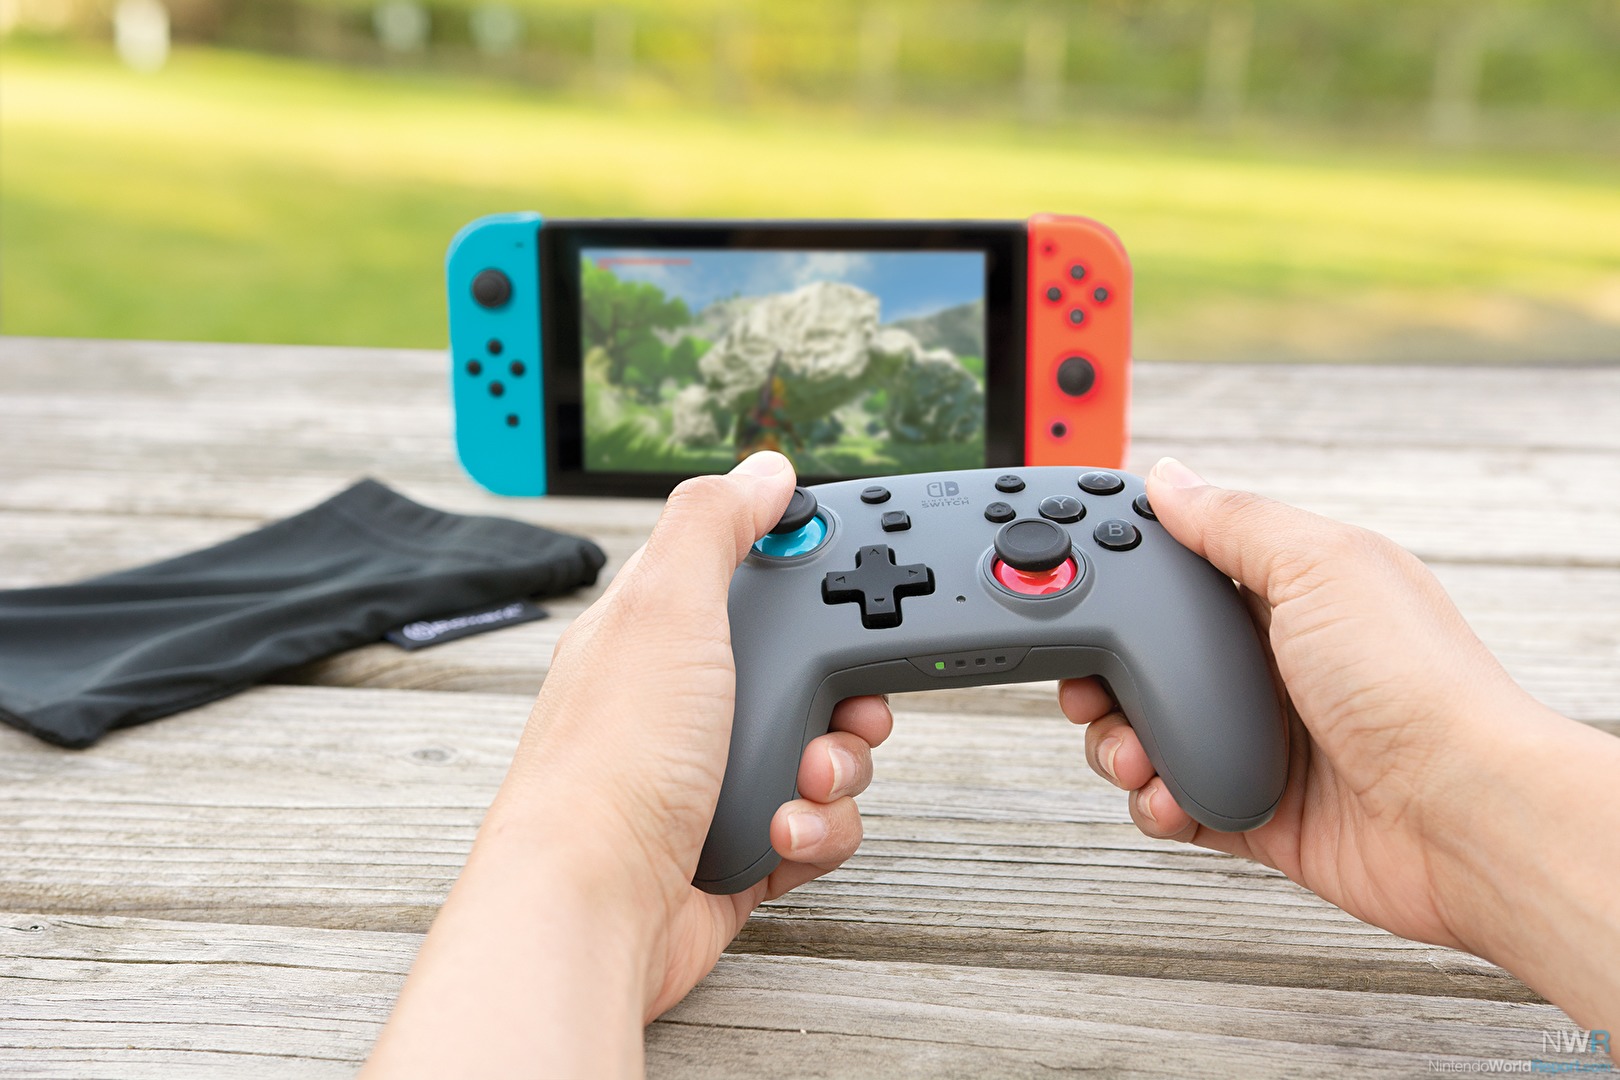 Nintendo Switch Pro Controller vs. PowerA Enhanced Wireless: Which should  you buy?